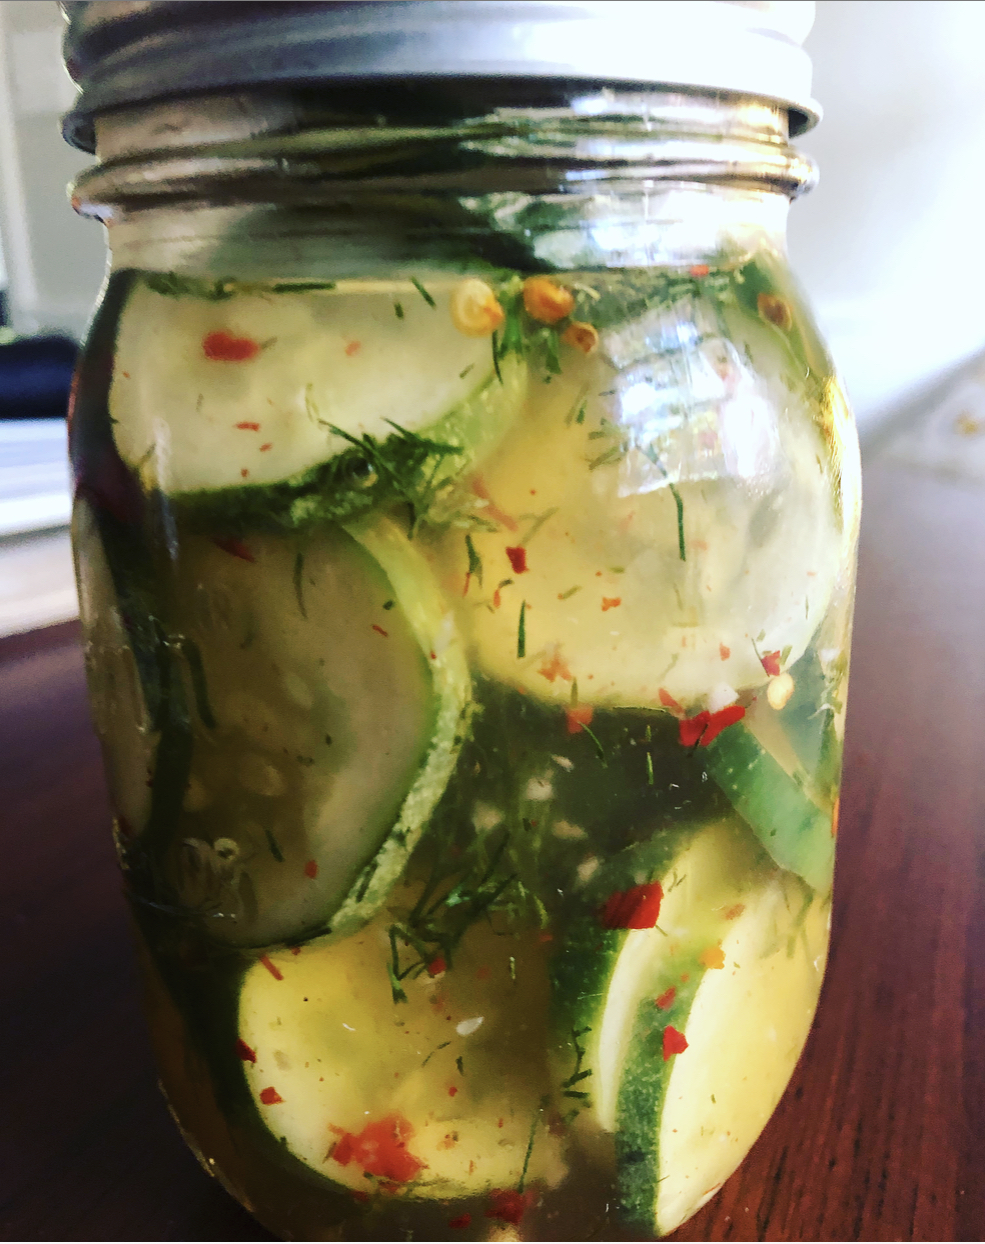 Homemade dill pickles in a Mason jar